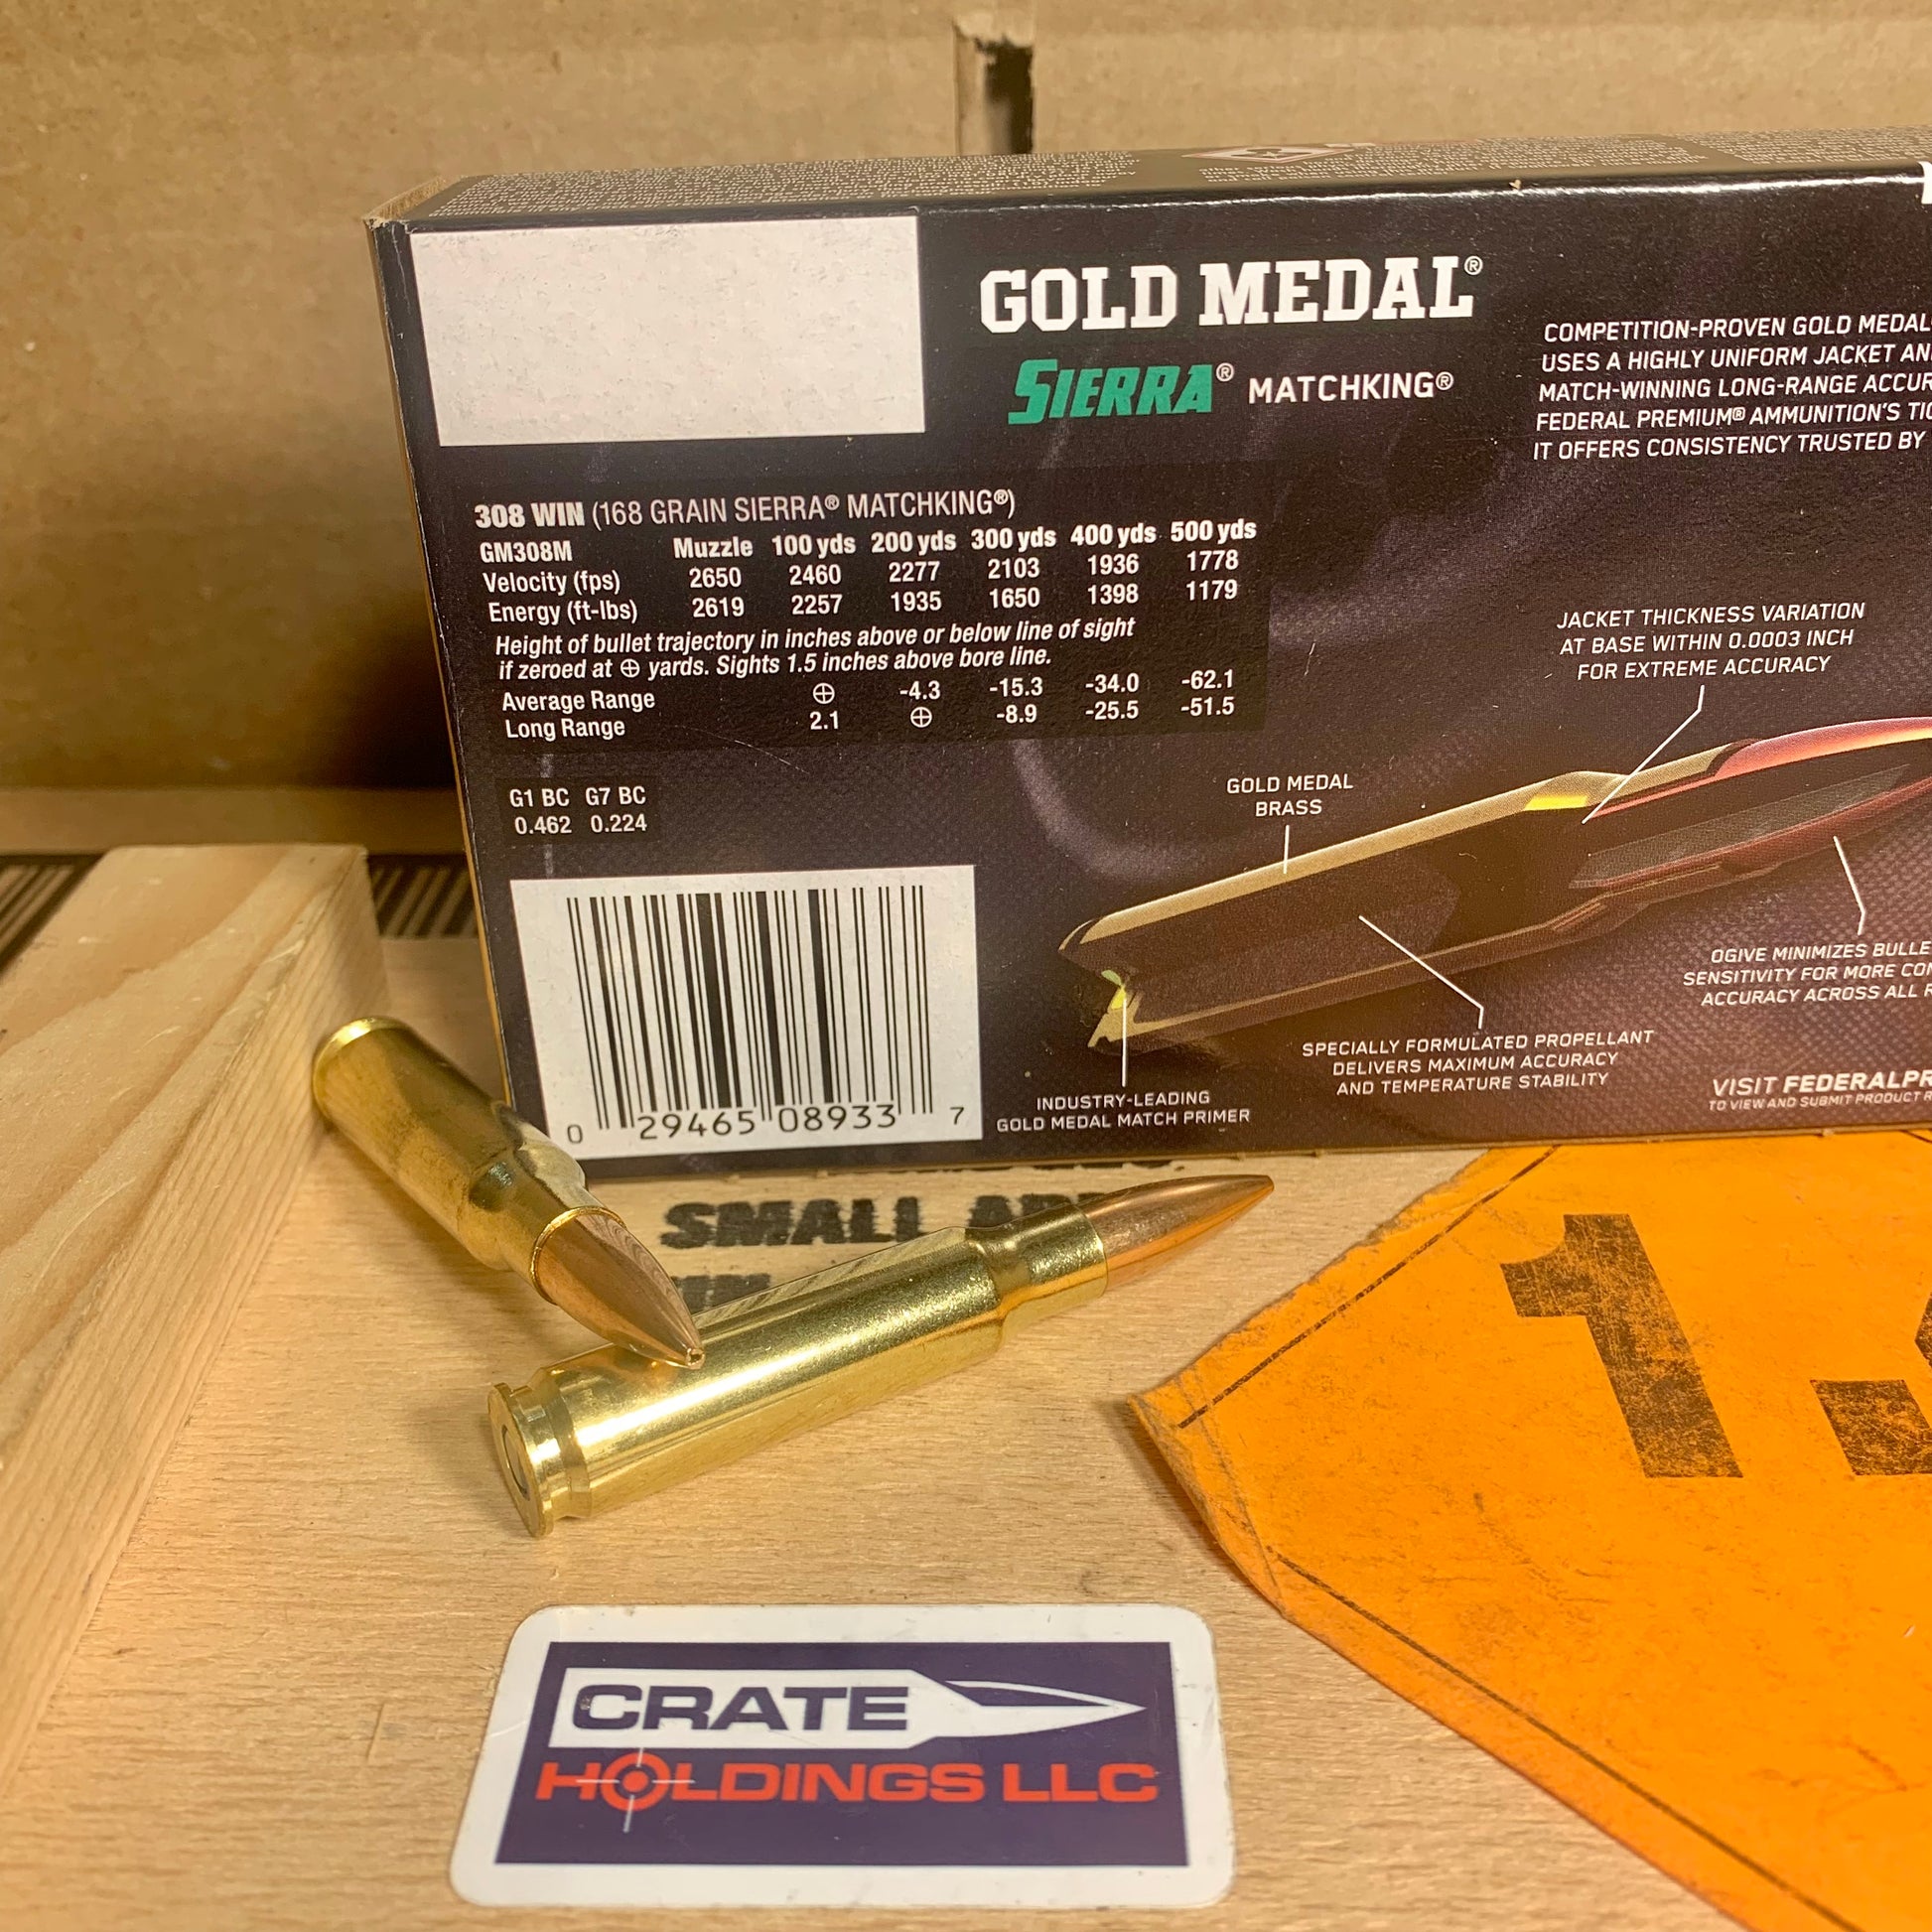 20 Round Box Federal Gold Medal Match .308 Win. Ammo 168gr Sierra MatchKing HPBT - GM308M